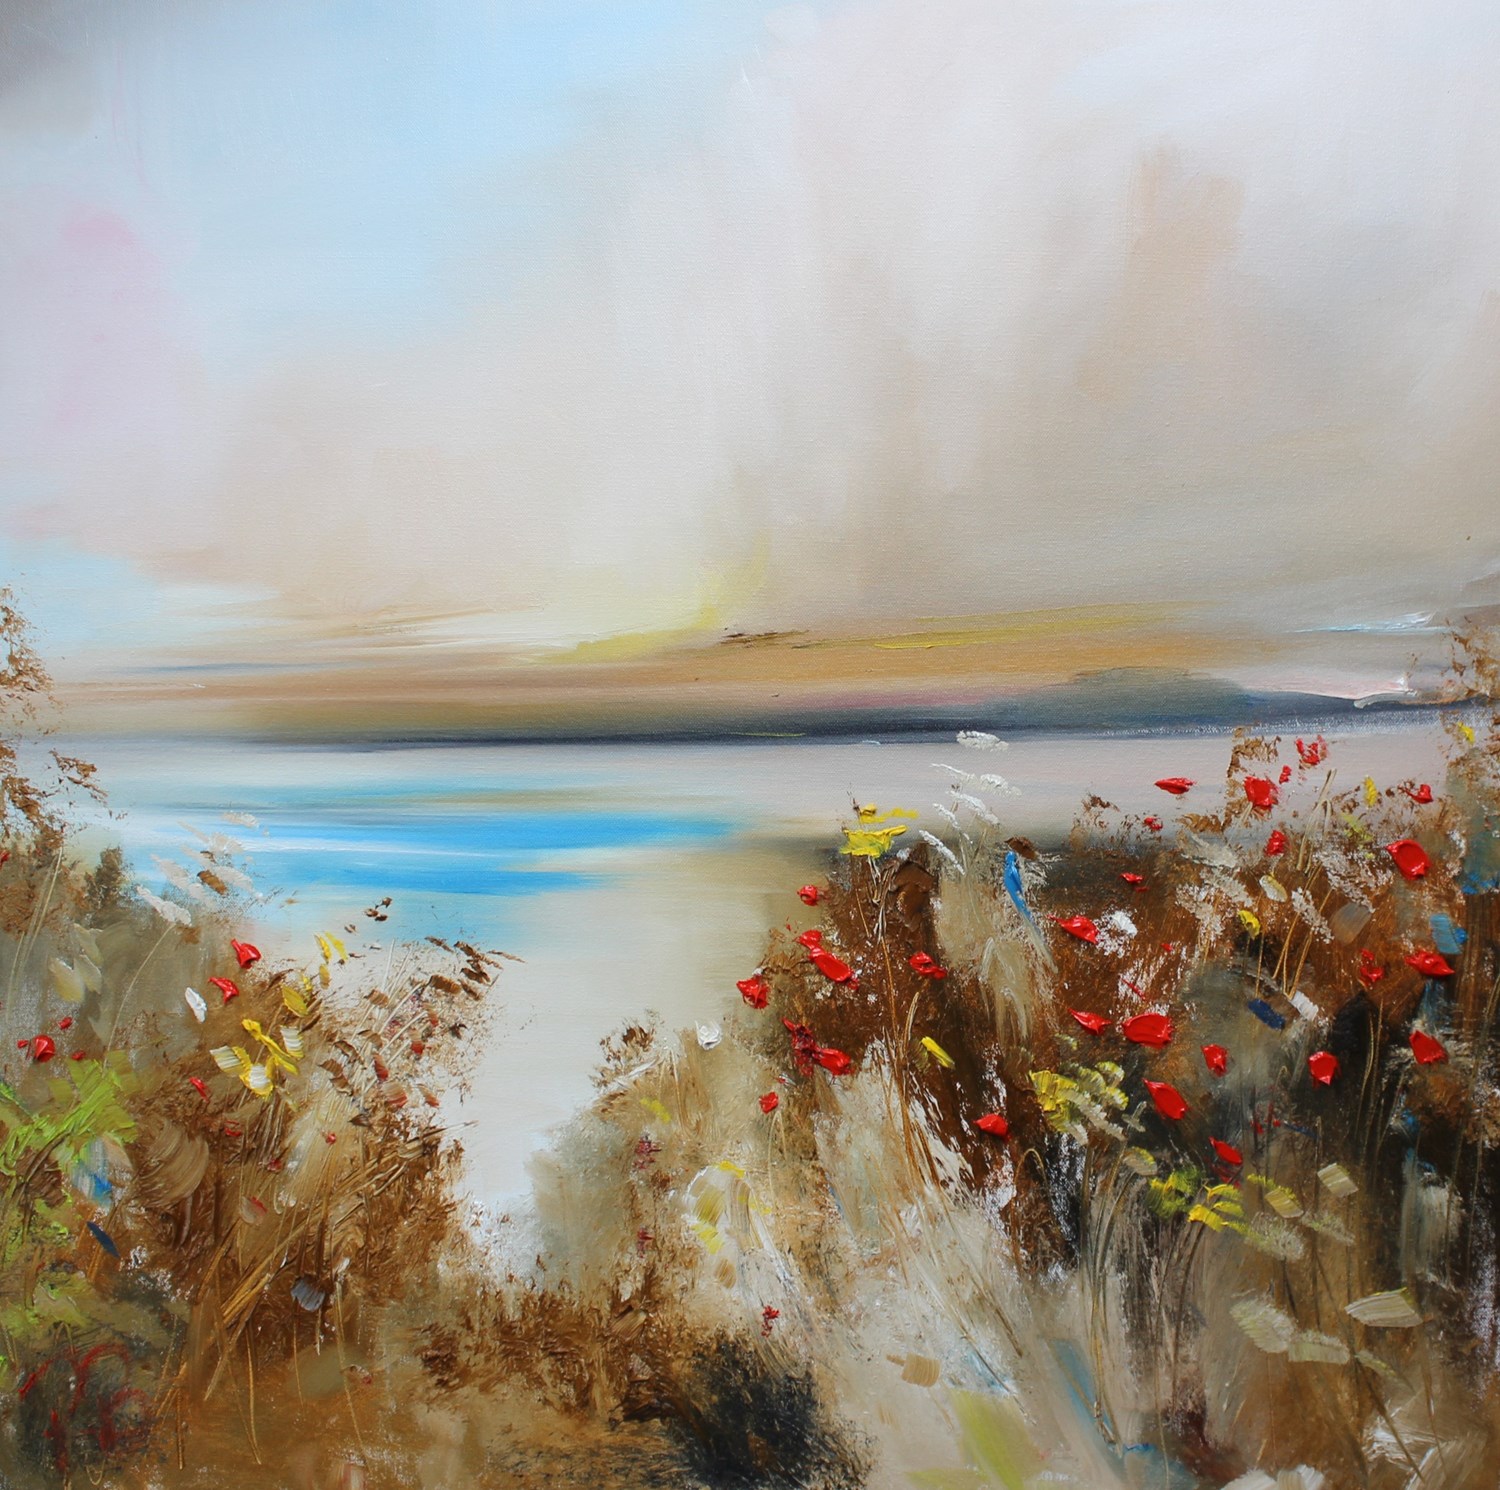 'Wild flower dunes' by artist Rosanne Barr